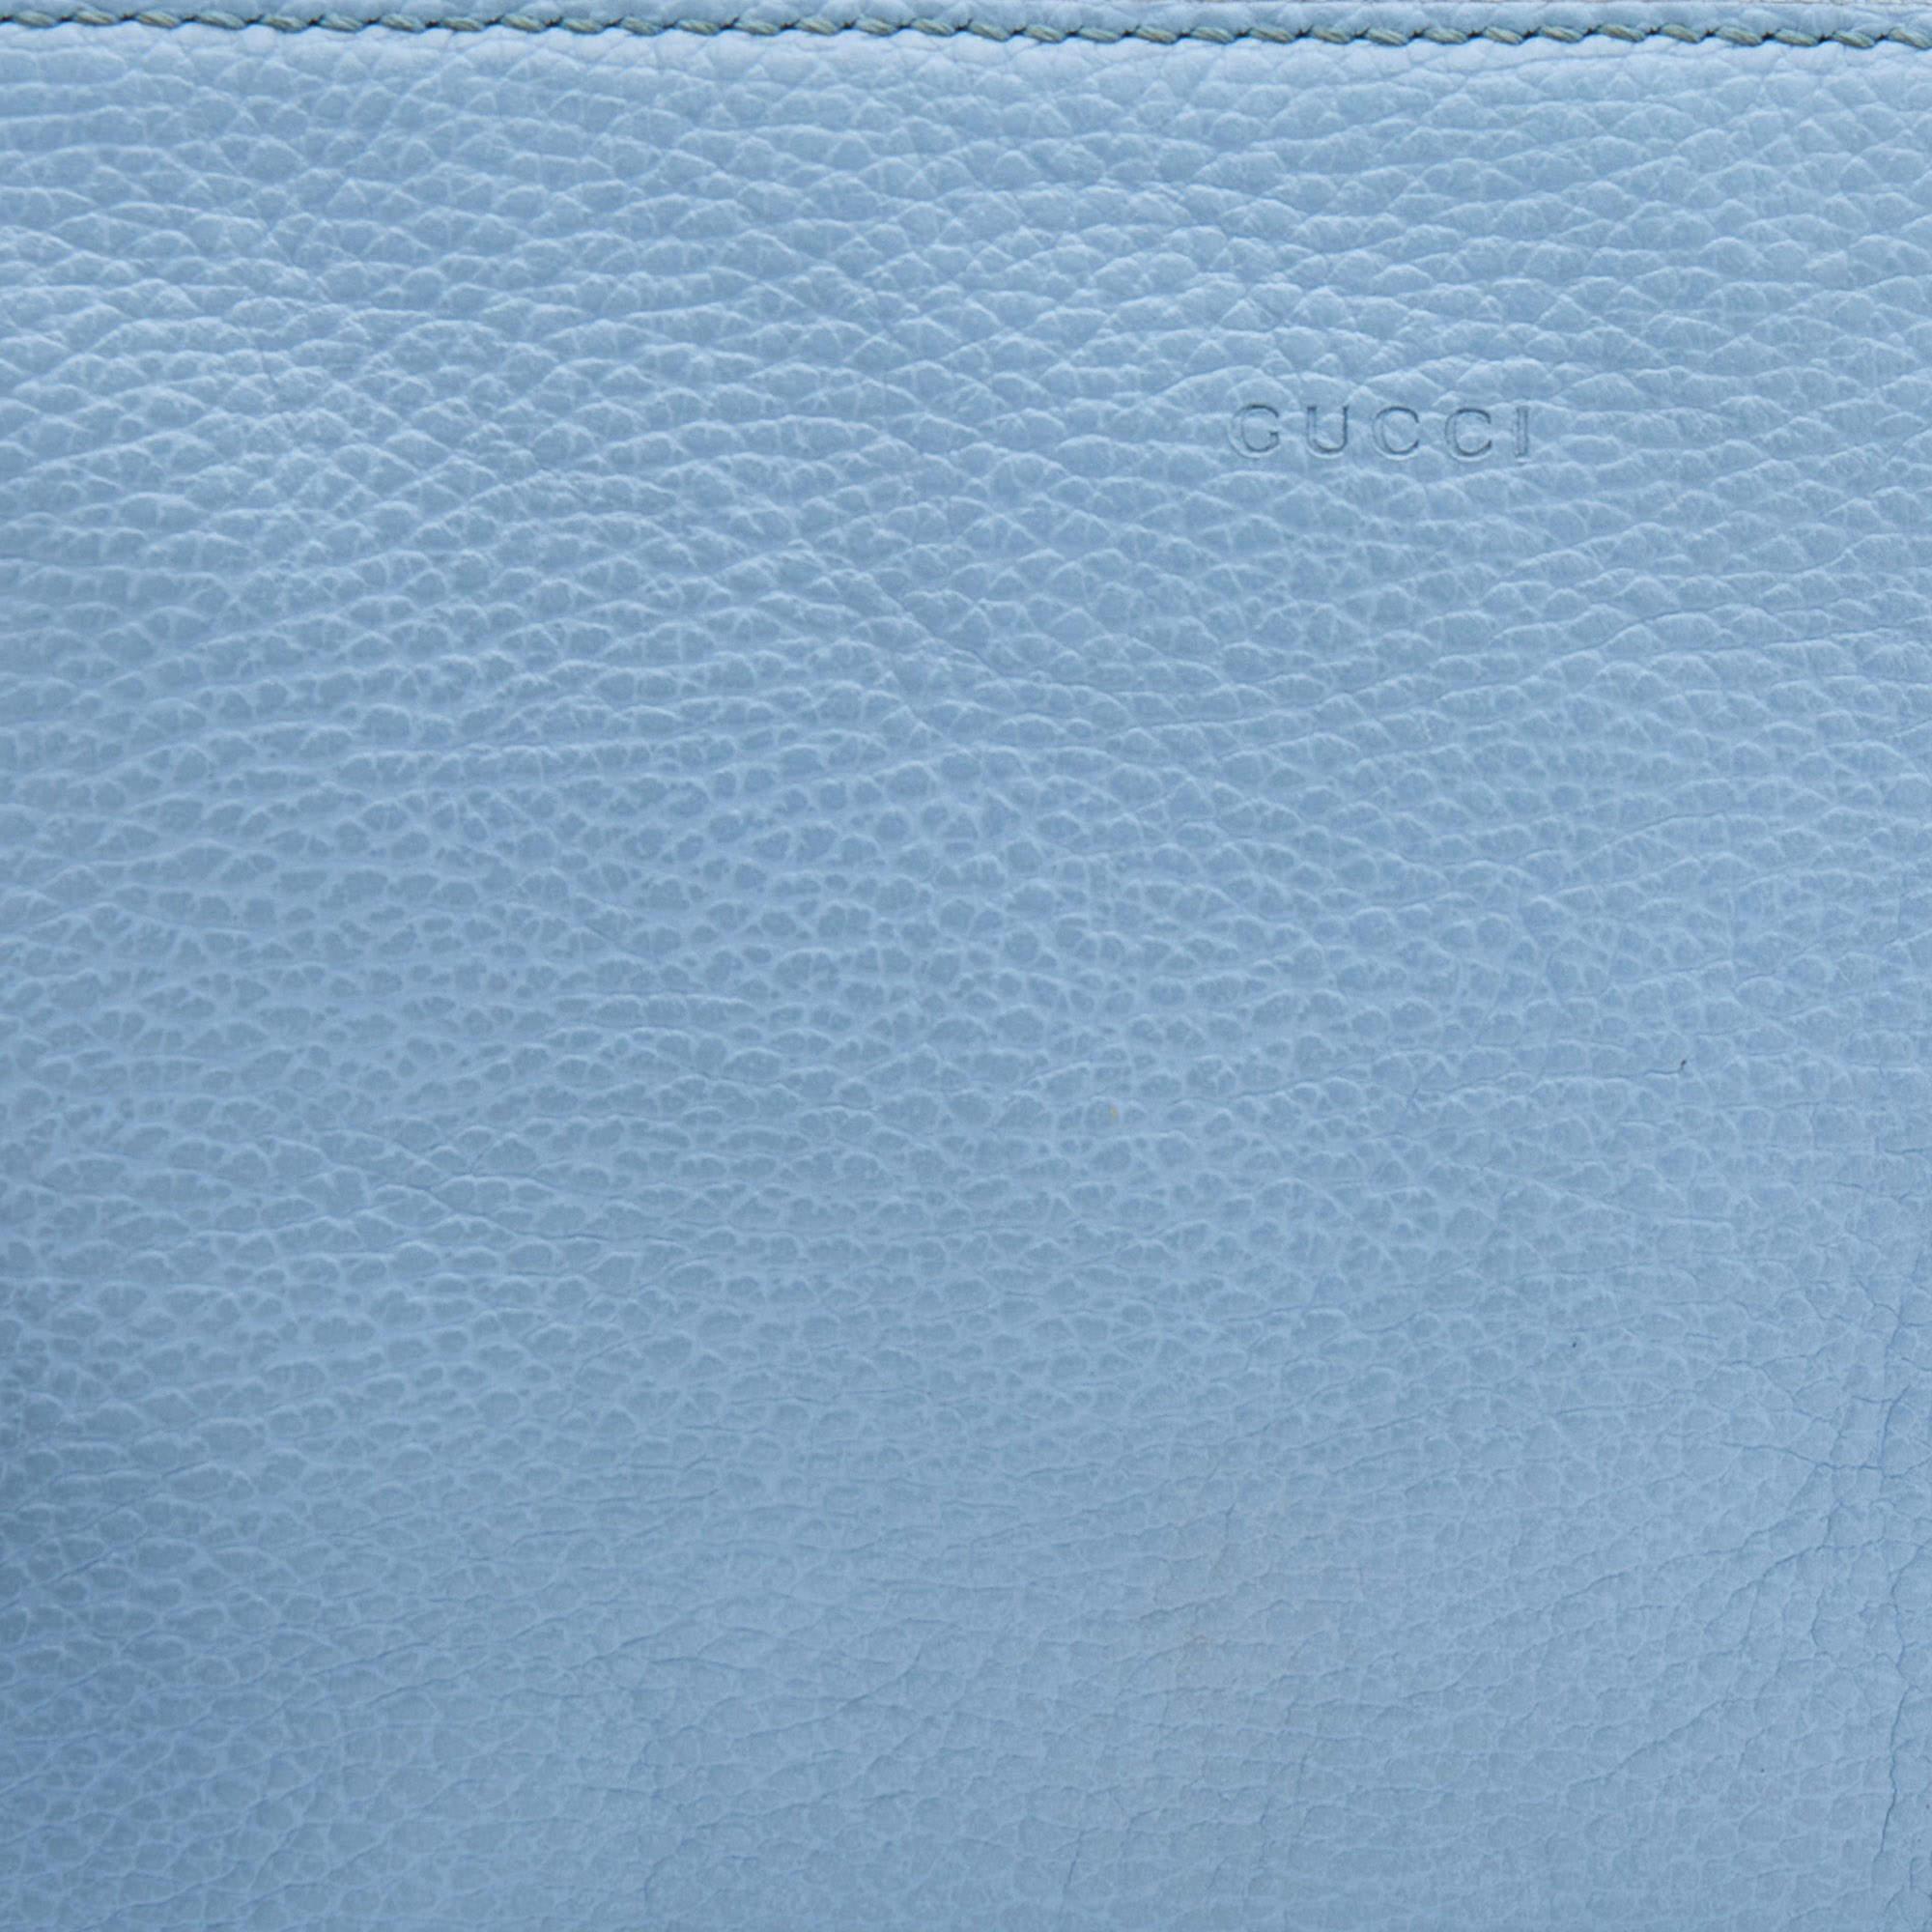 Gucci Light Blue Leather Bamboo Tassel Clutch 4